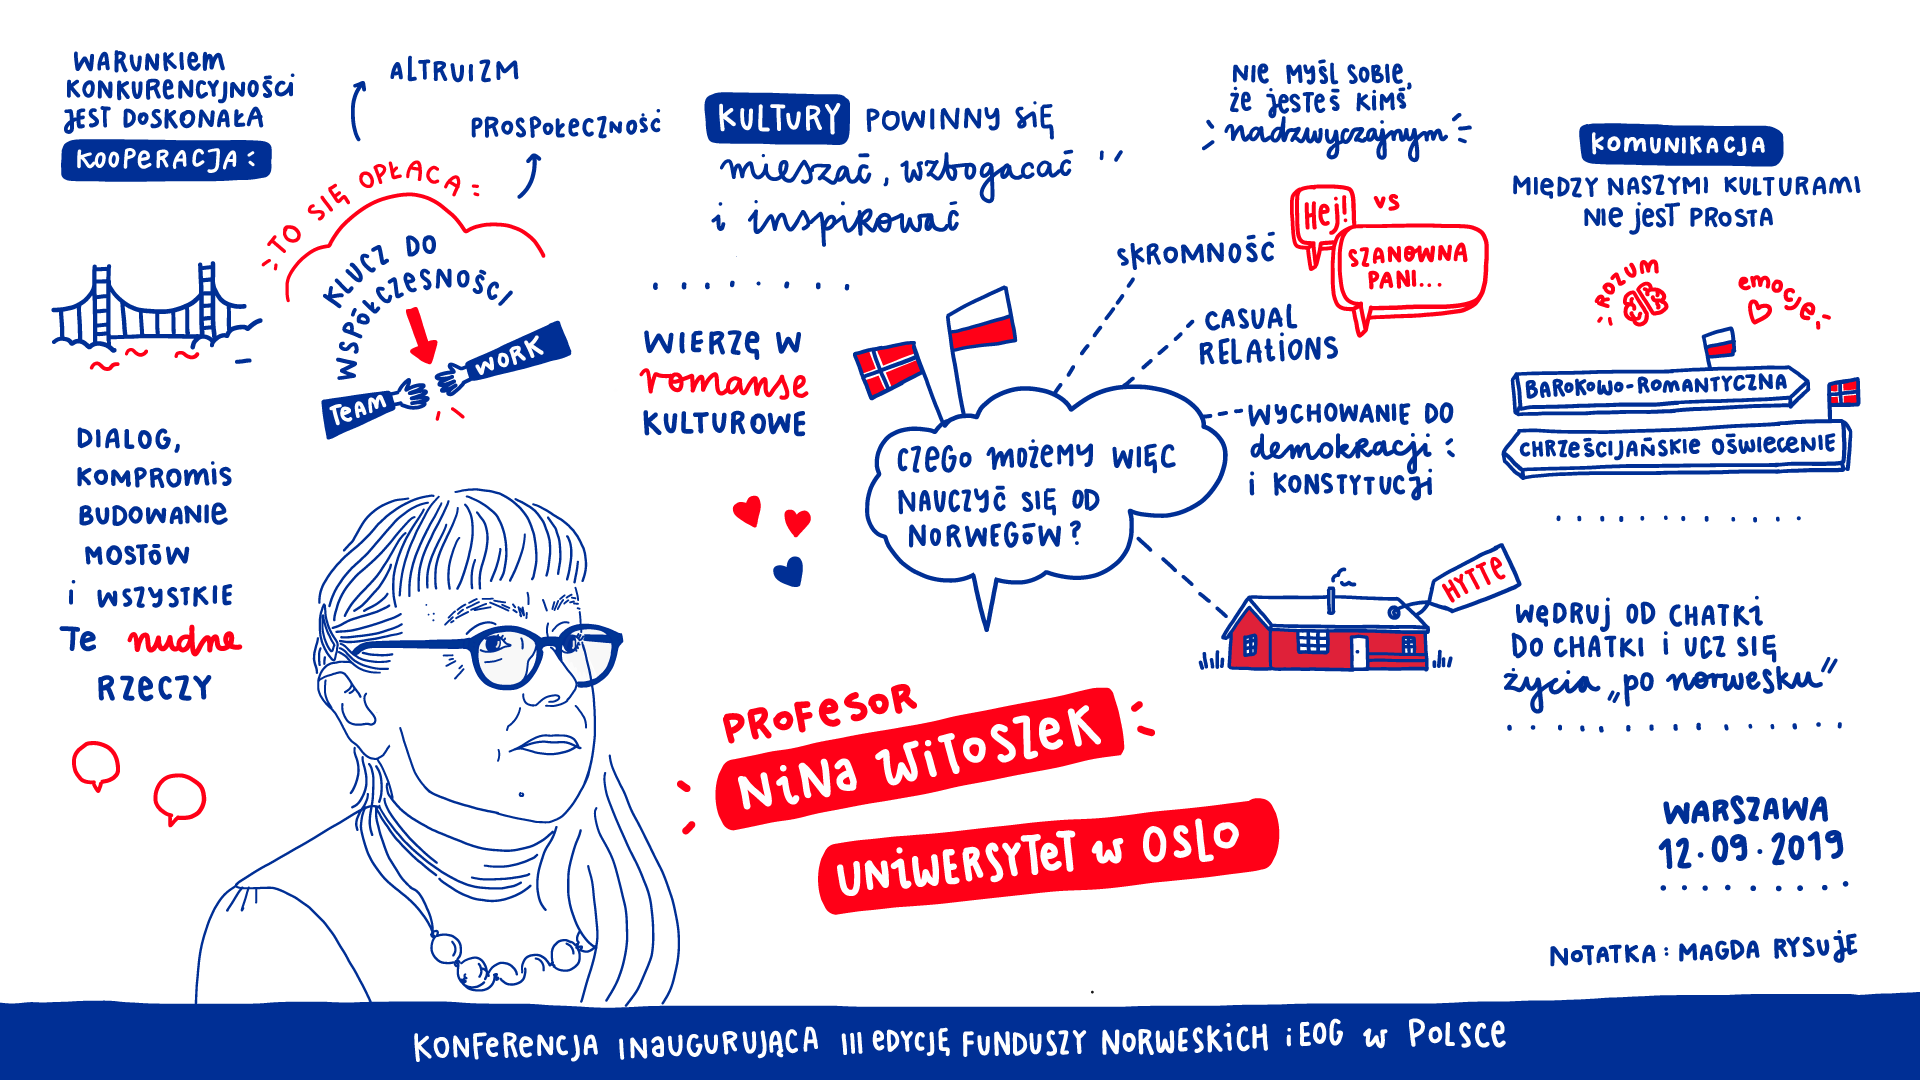 Graphic description of the speech - Prof. Nina Witoszek, University of Oslo